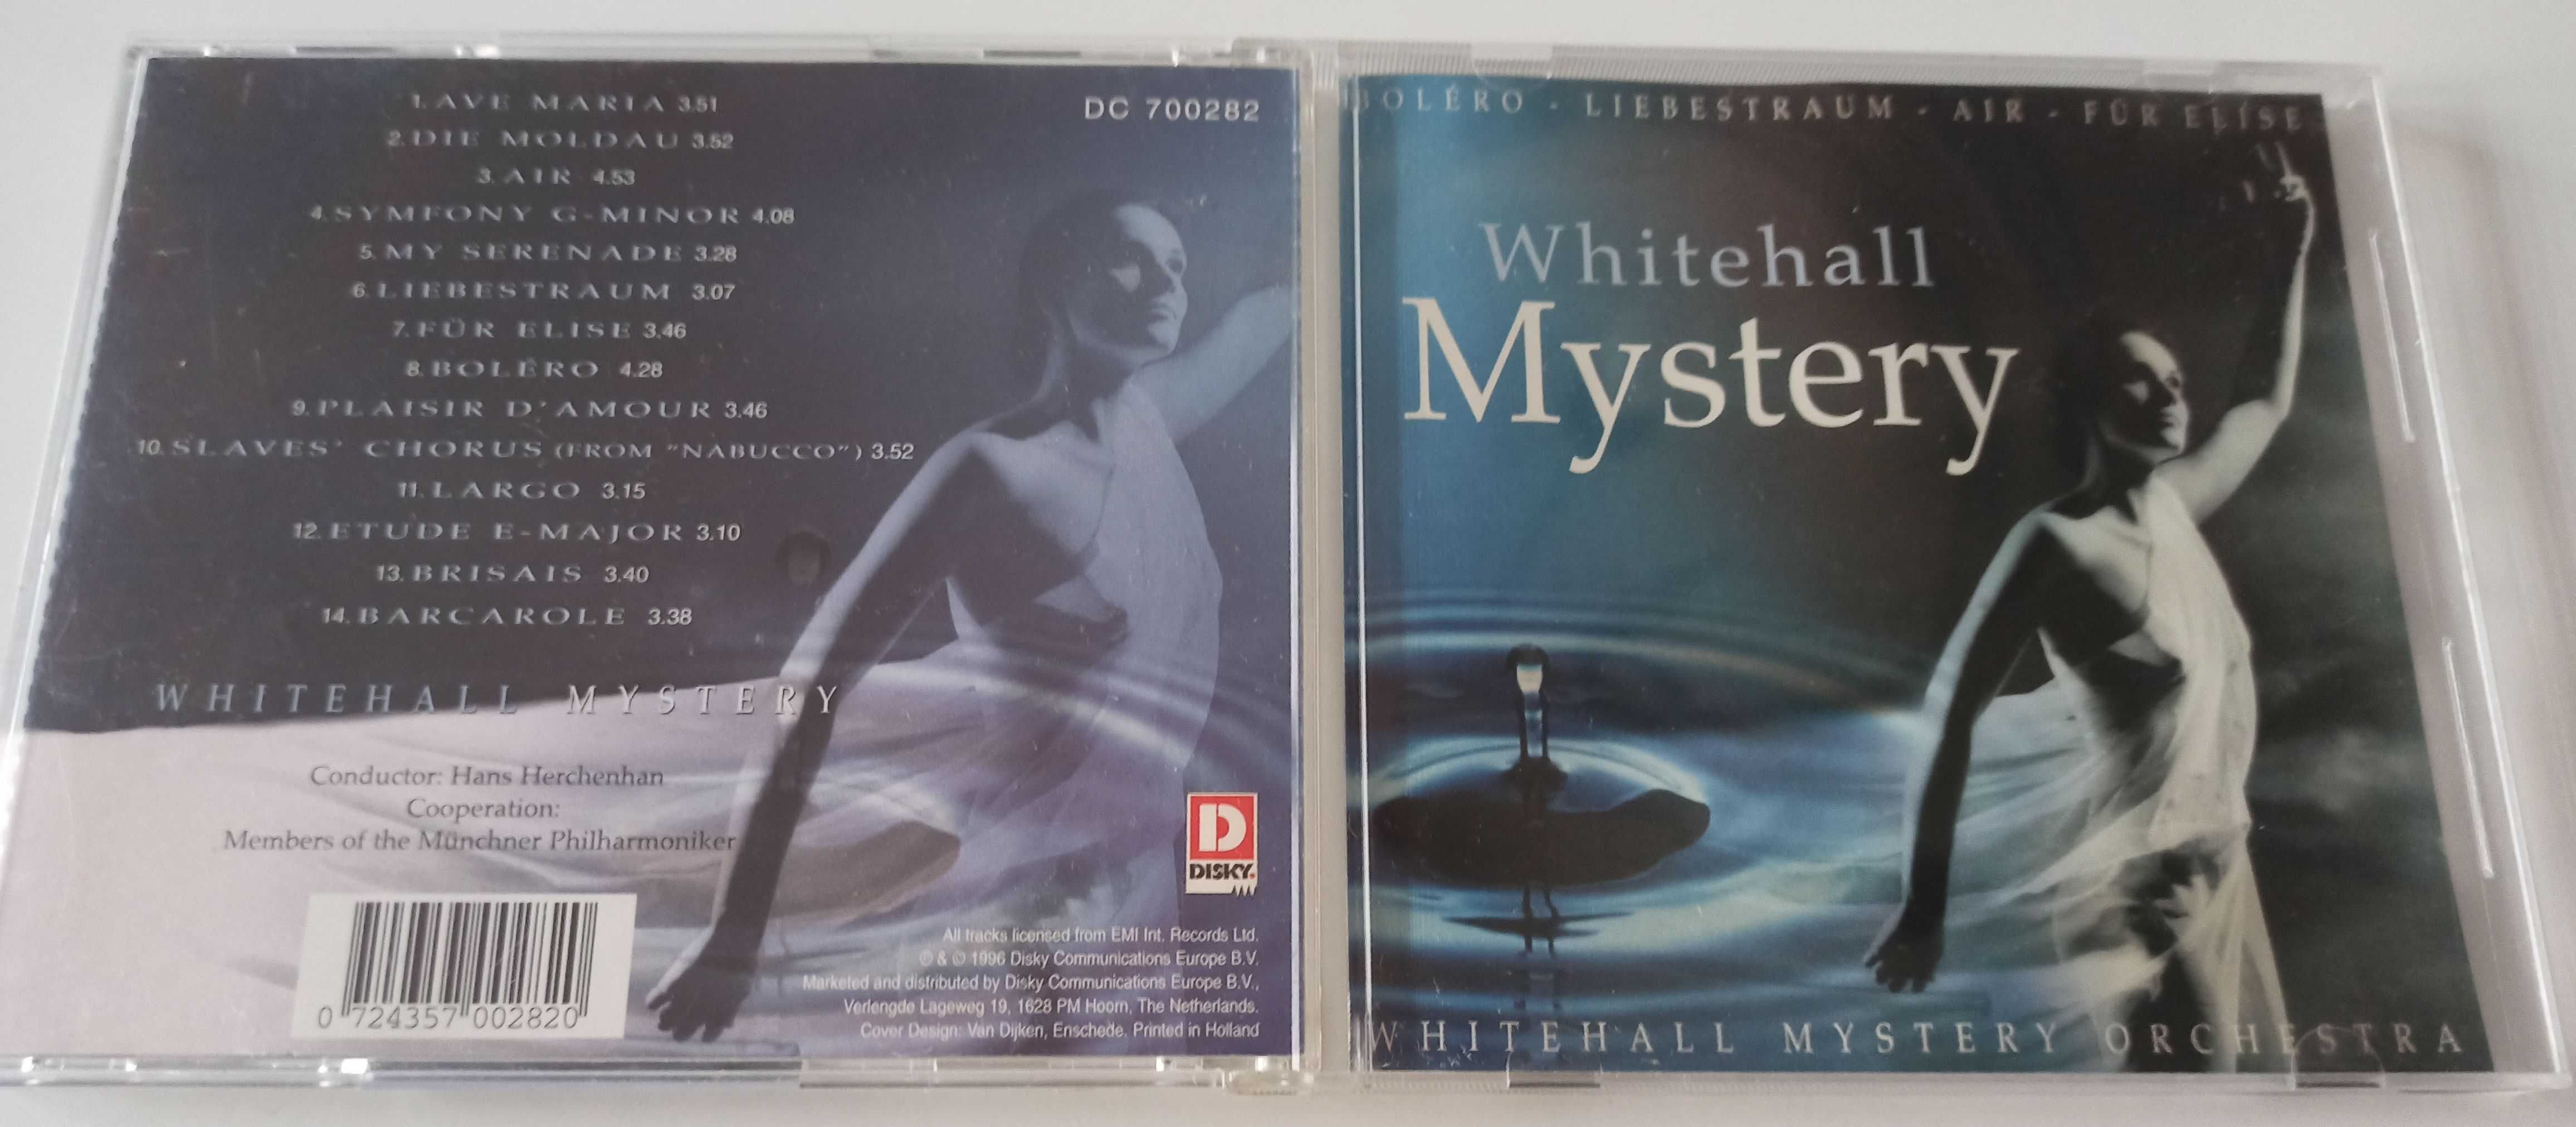 Whitehall Mystery orkiestra filharmoniczna Monachium Bach Verdi